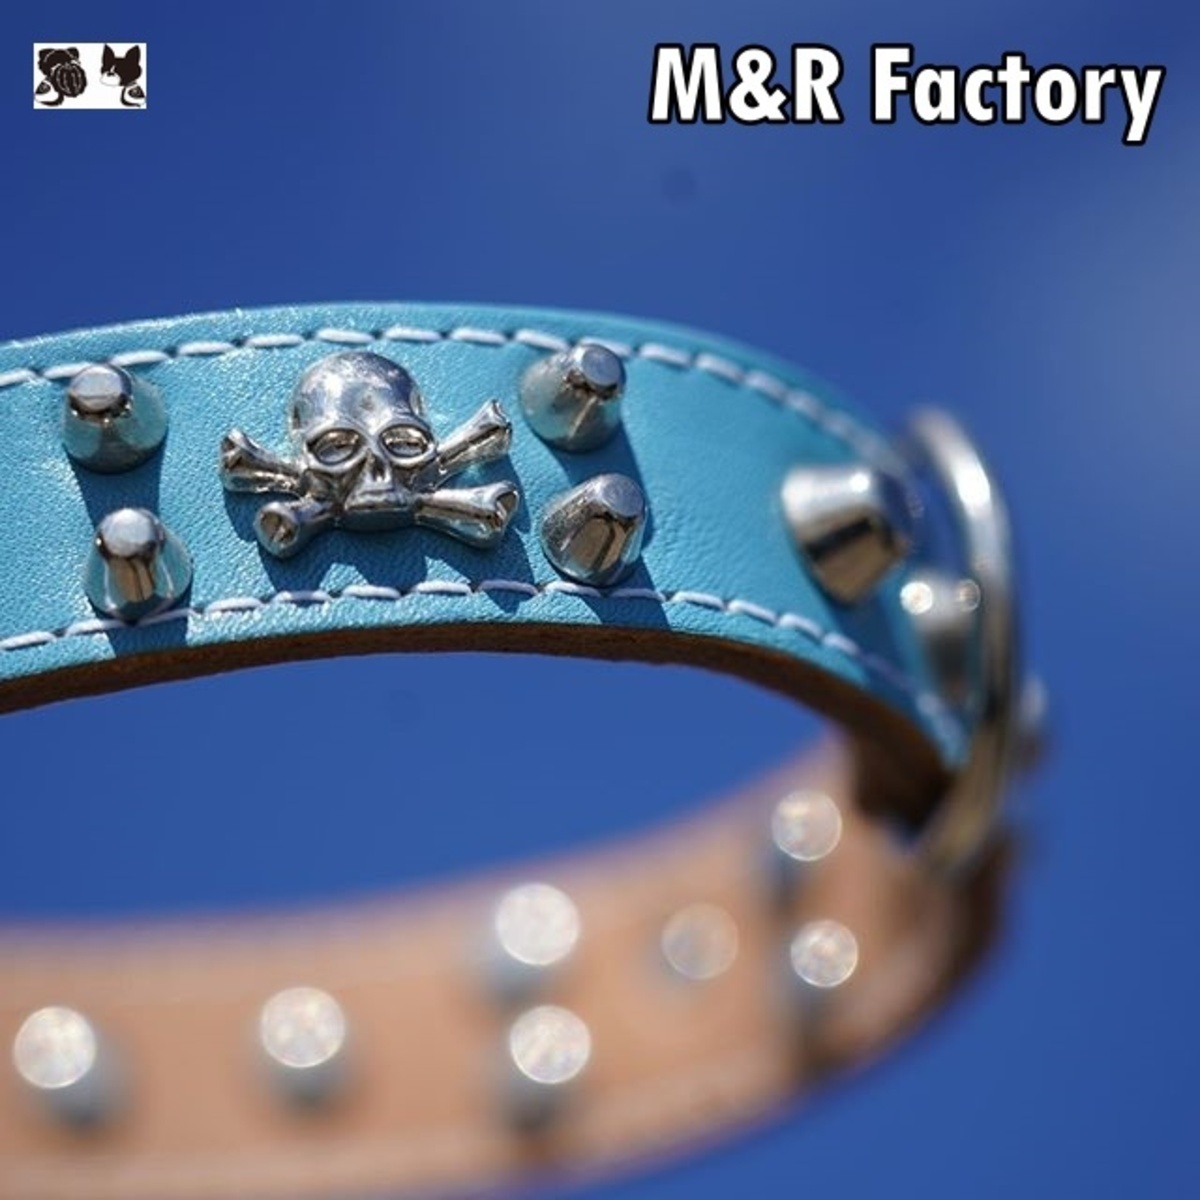 Fwd: M&R Factory